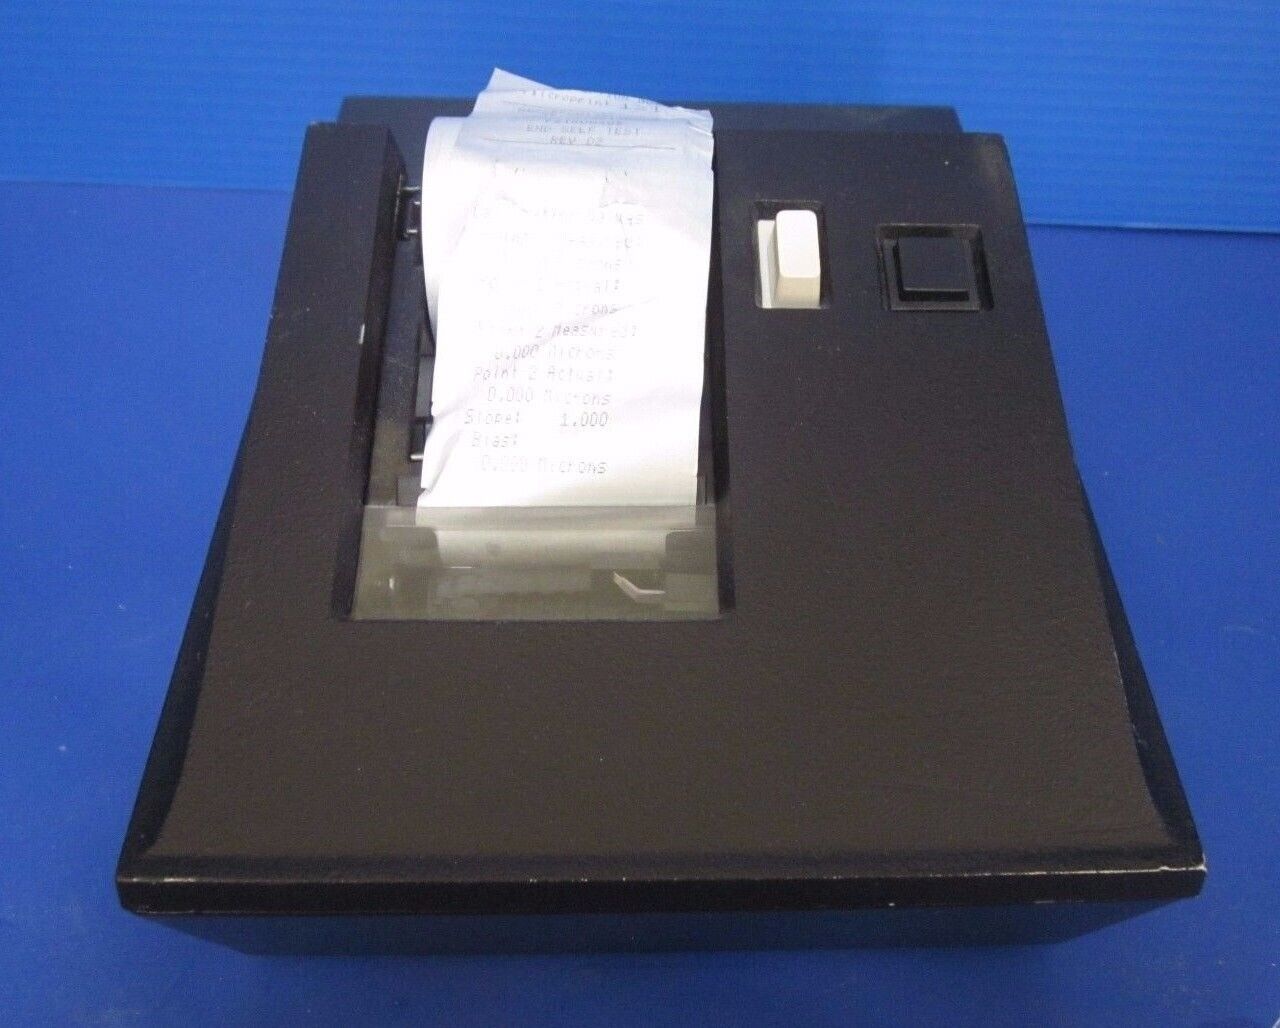 Nanometrics Scientific Software and Instrument, Microprint 121 Printer, Used